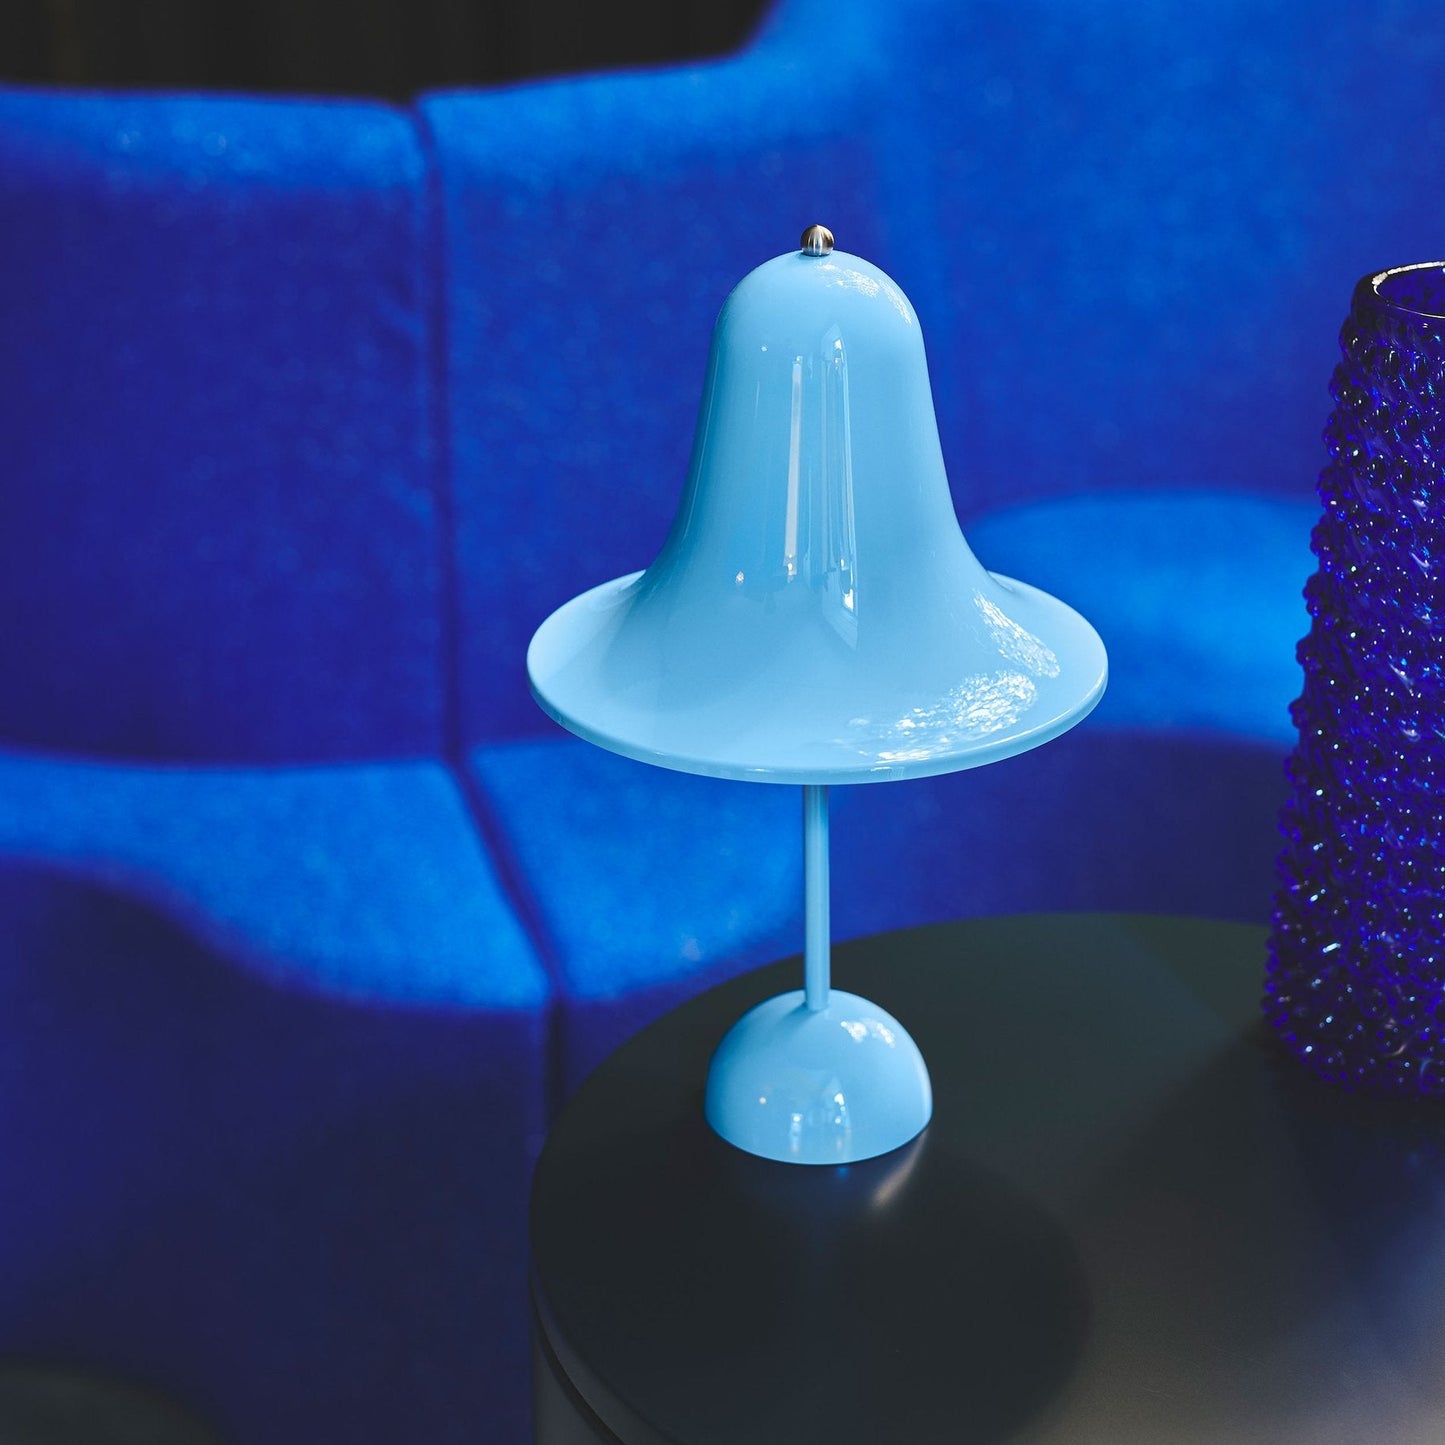 Pantop Portable Table Lamp, Light Blue